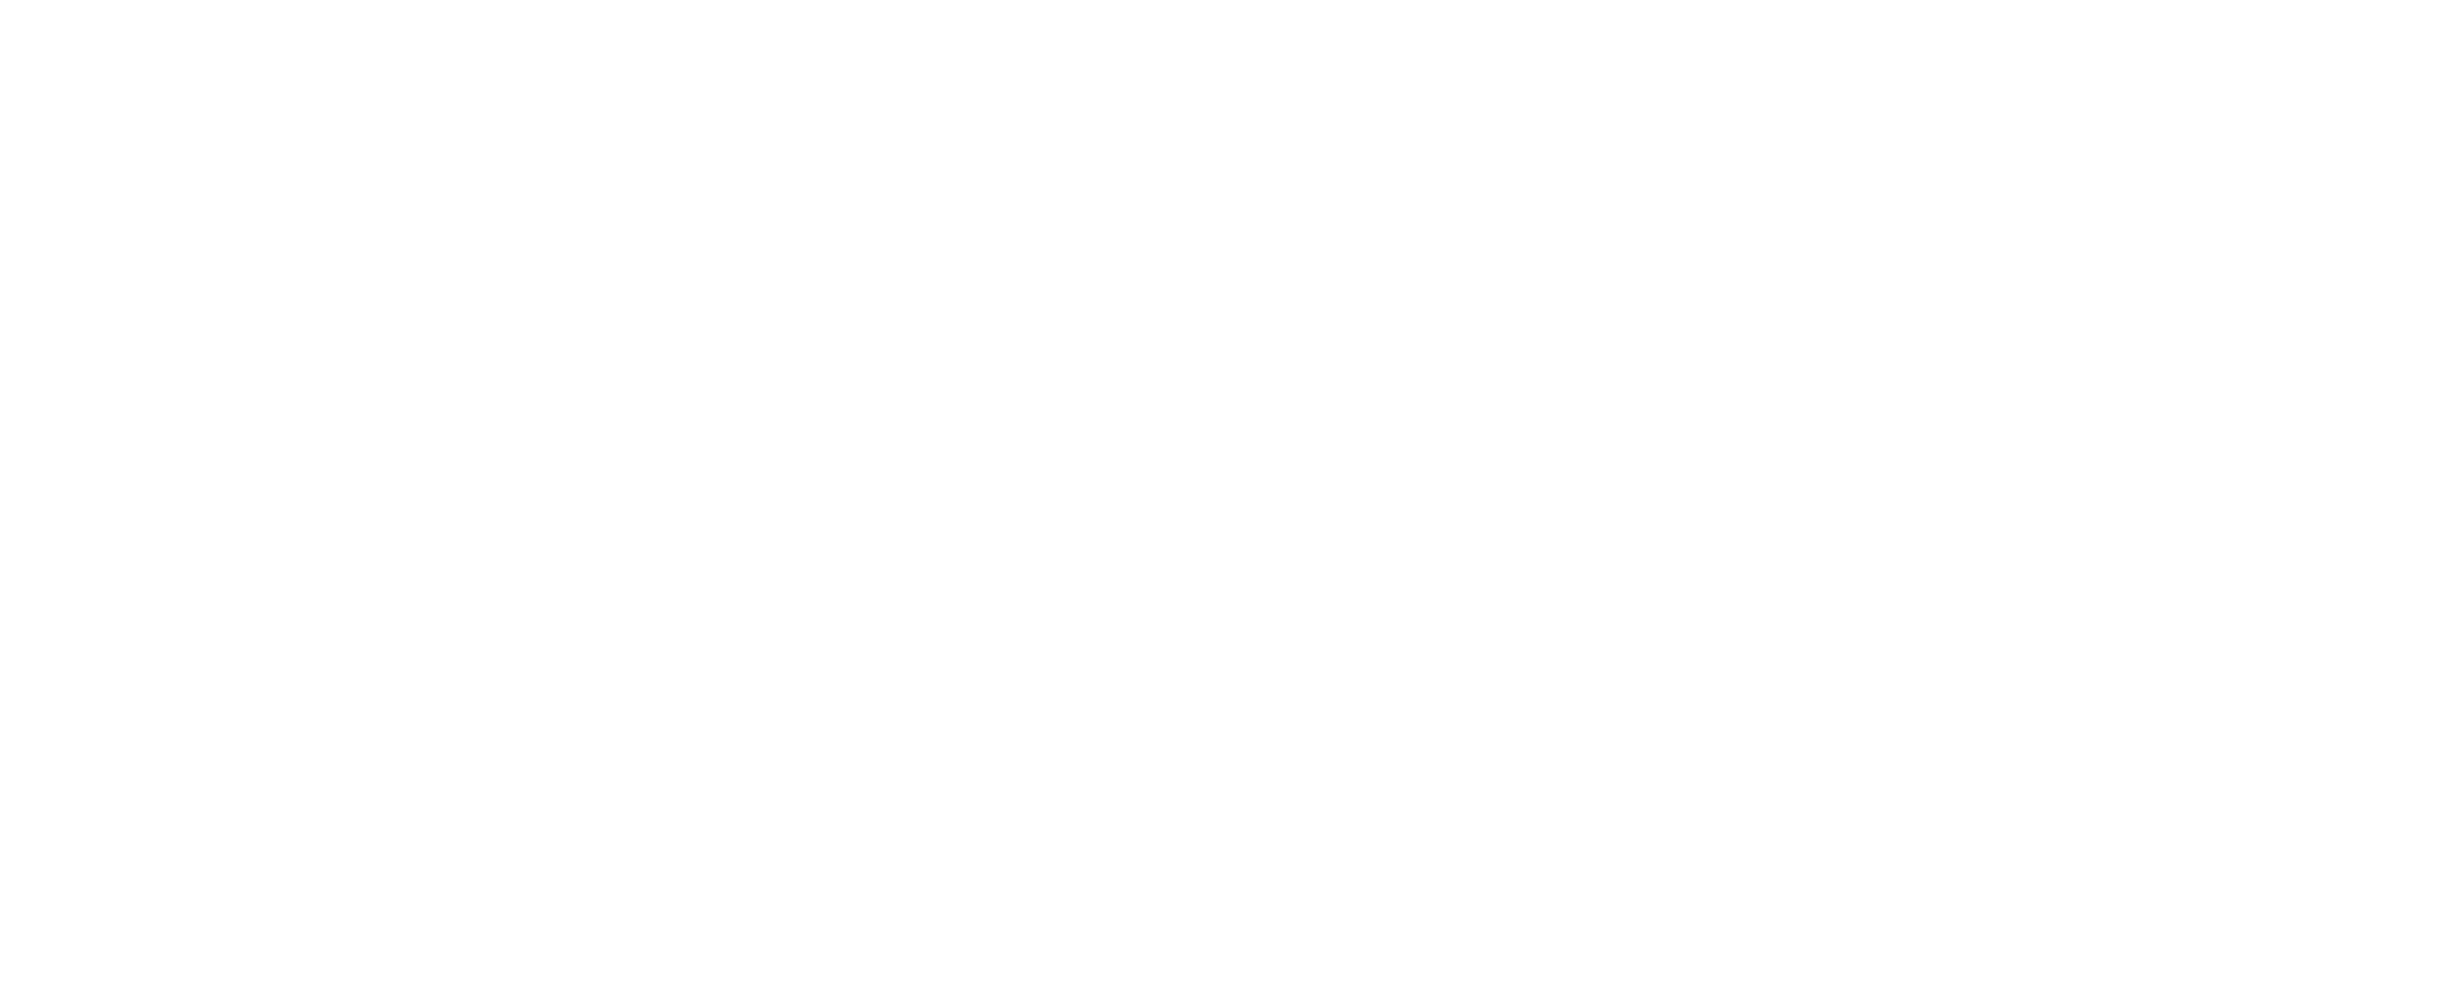 Love, Lizzo logo